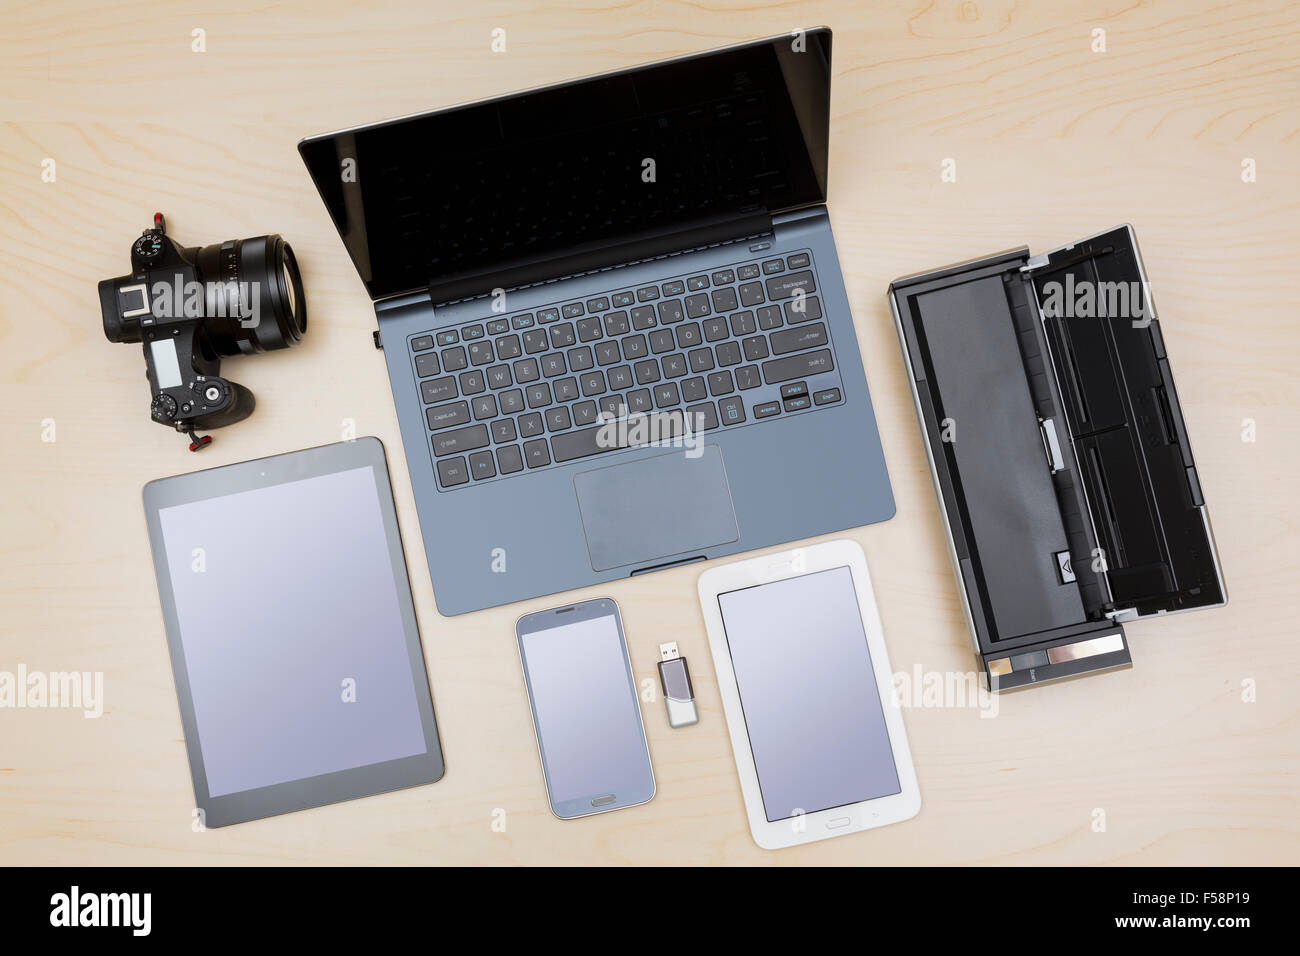 Vista aerea di apparecchiature digitali, dispositivi o gadget - laptop, notebook, fotocamera, tablet, telefono, scanner su una scrivania Foto Stock